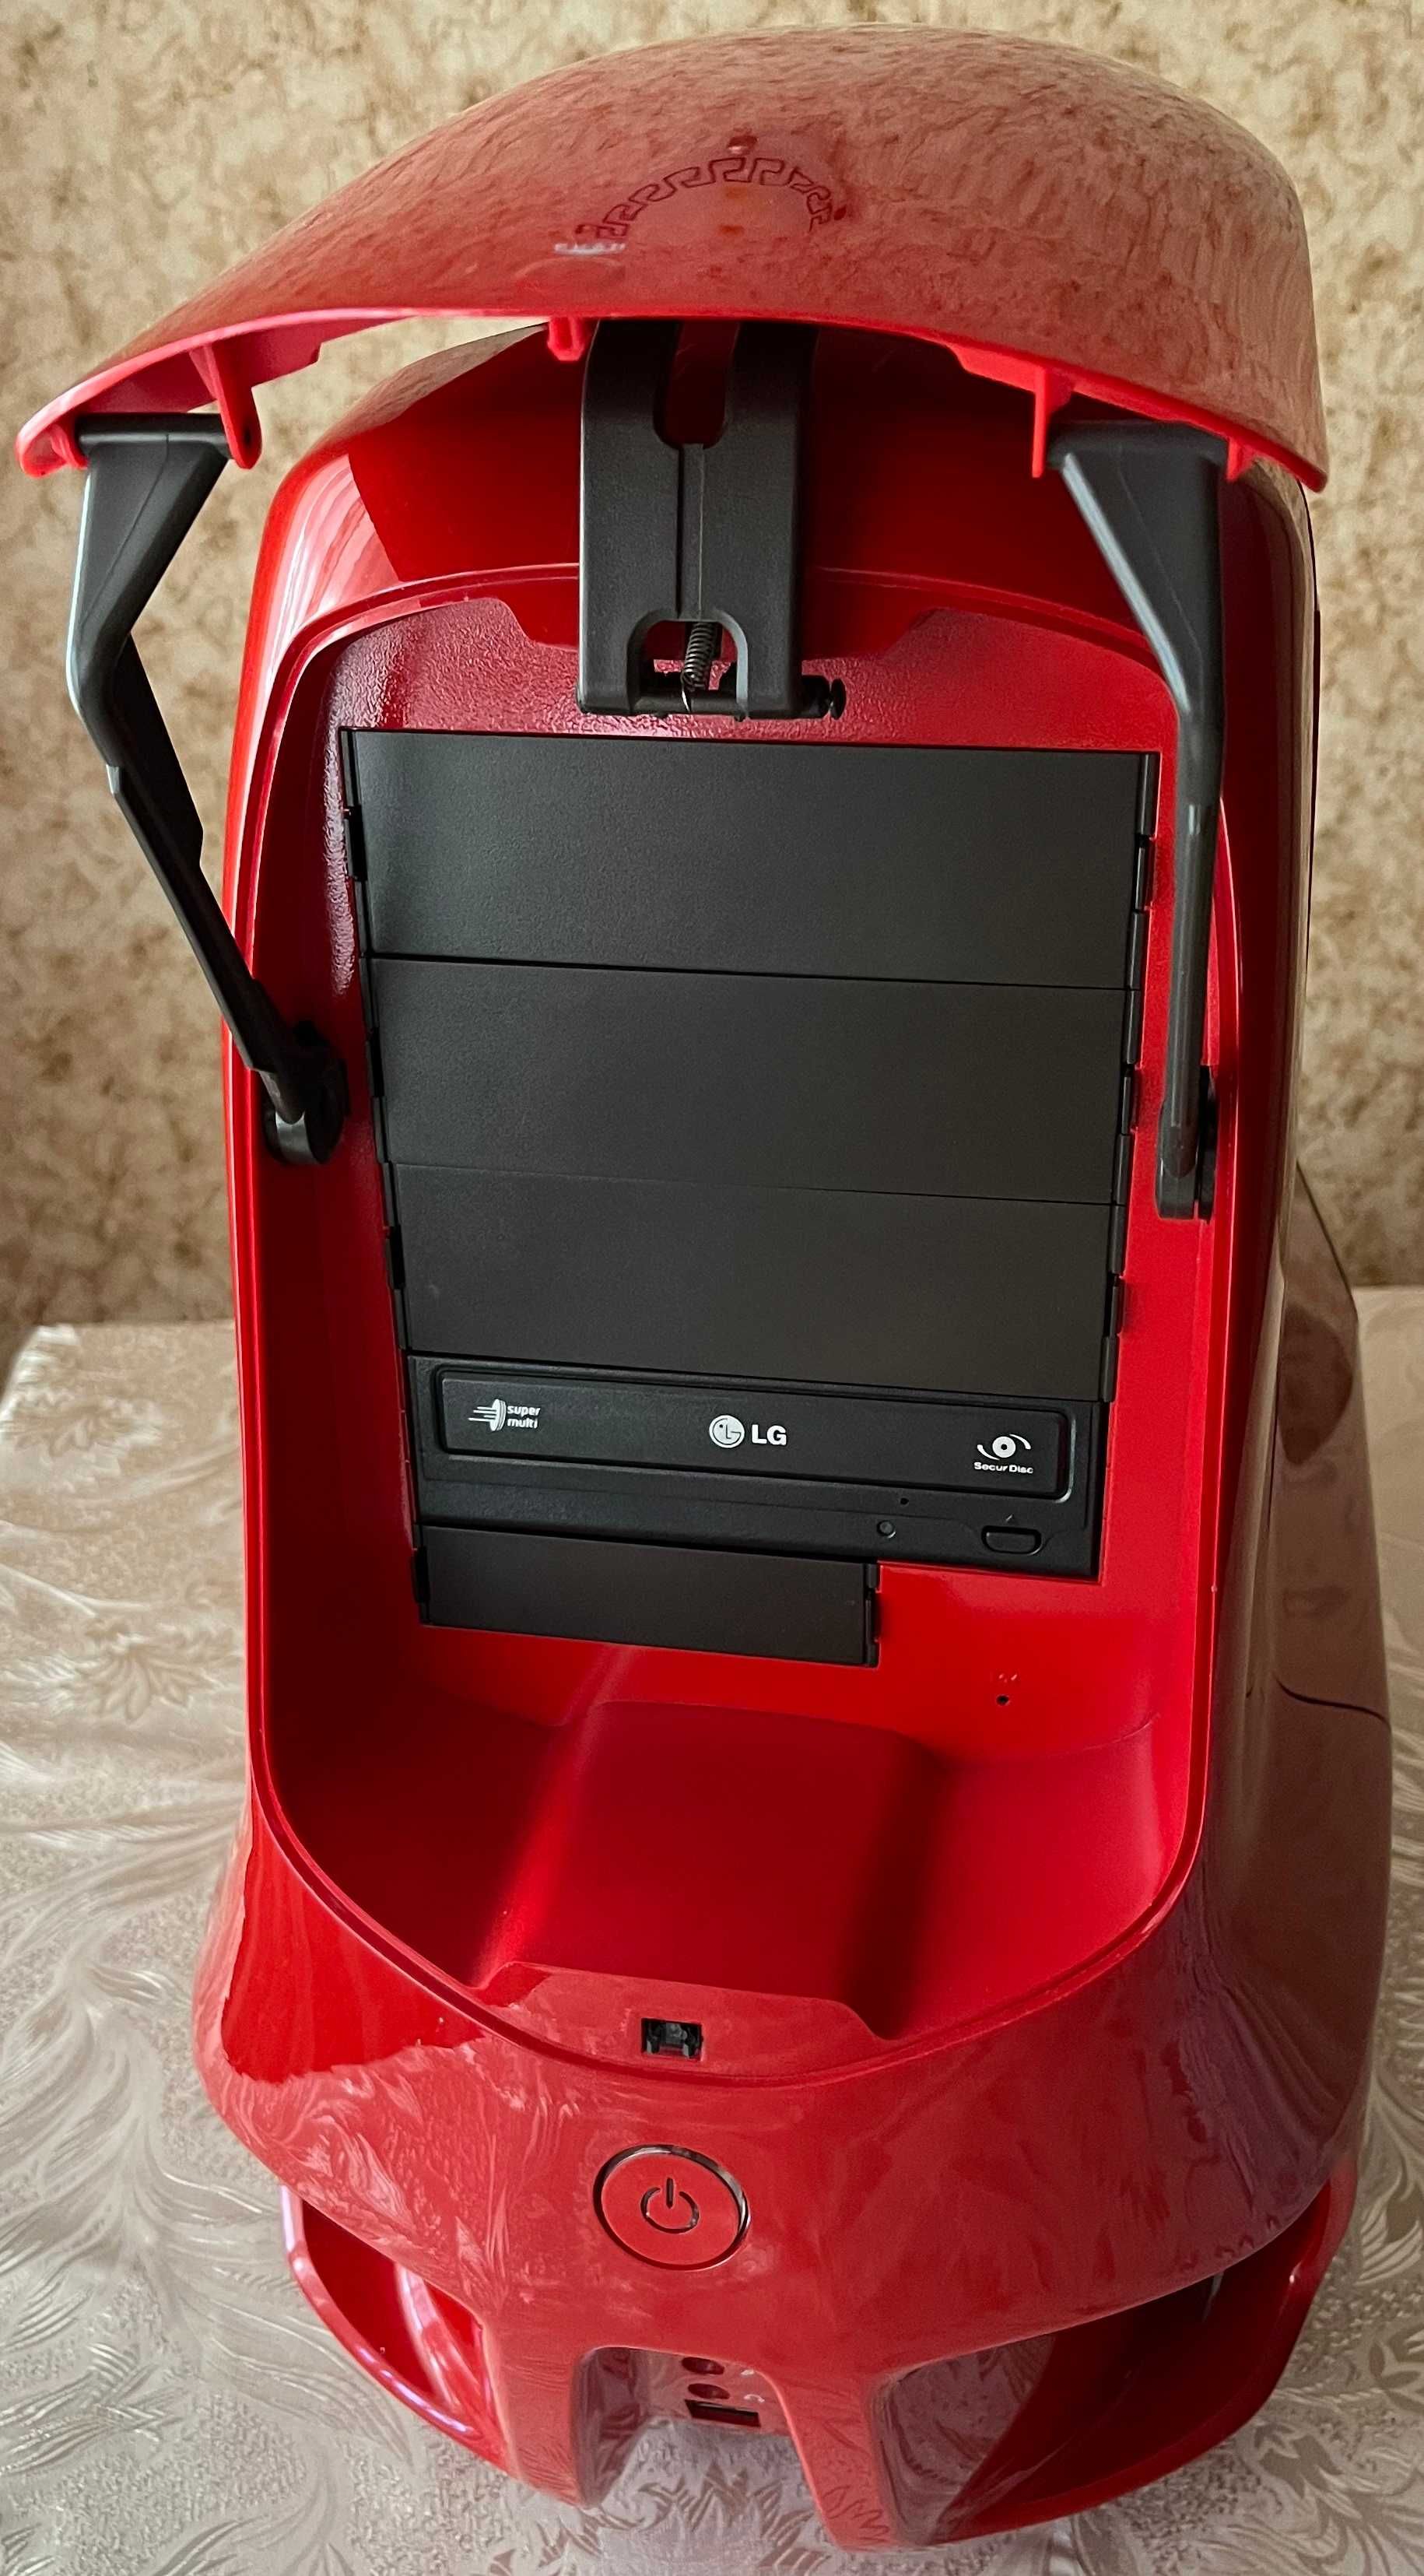 Asus Vento 3600 Red - Компютърна кутия (PC Case)